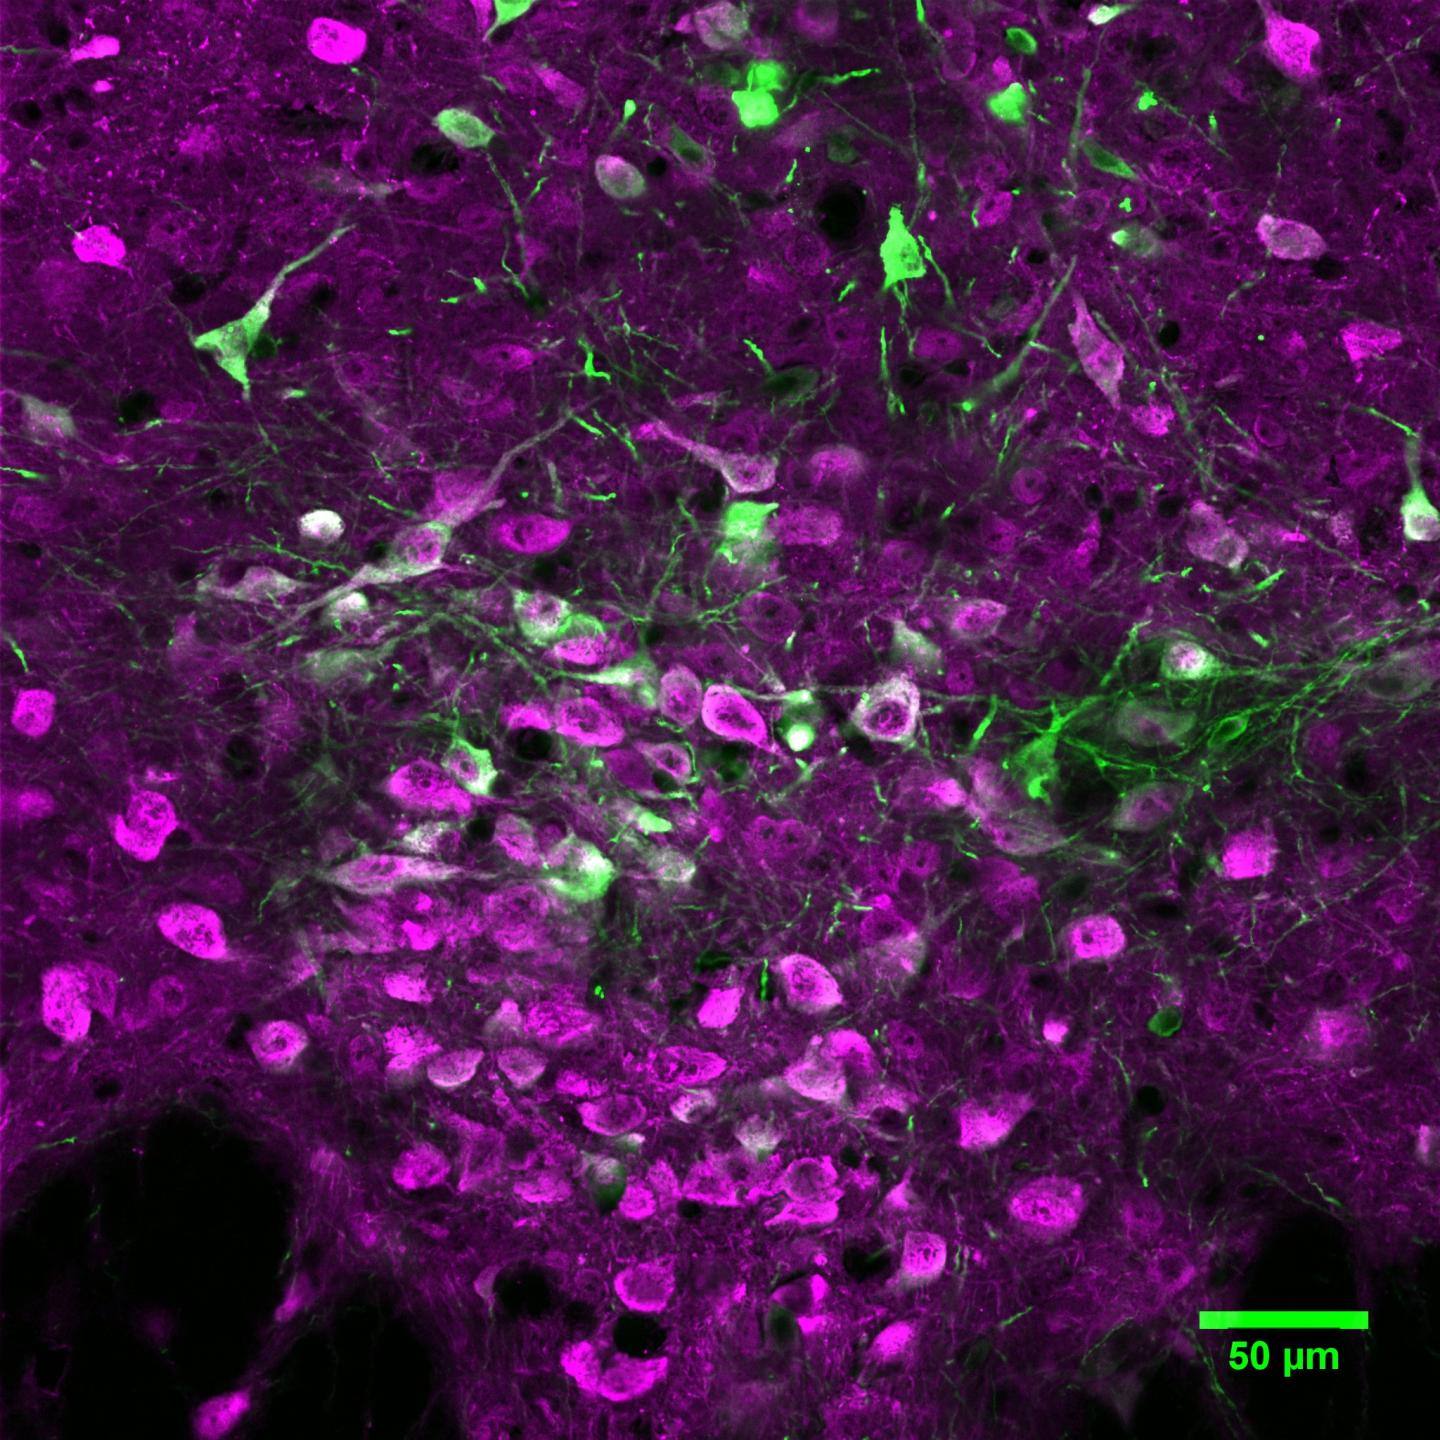 Image Microphotography of Serotonin-producing Neurons